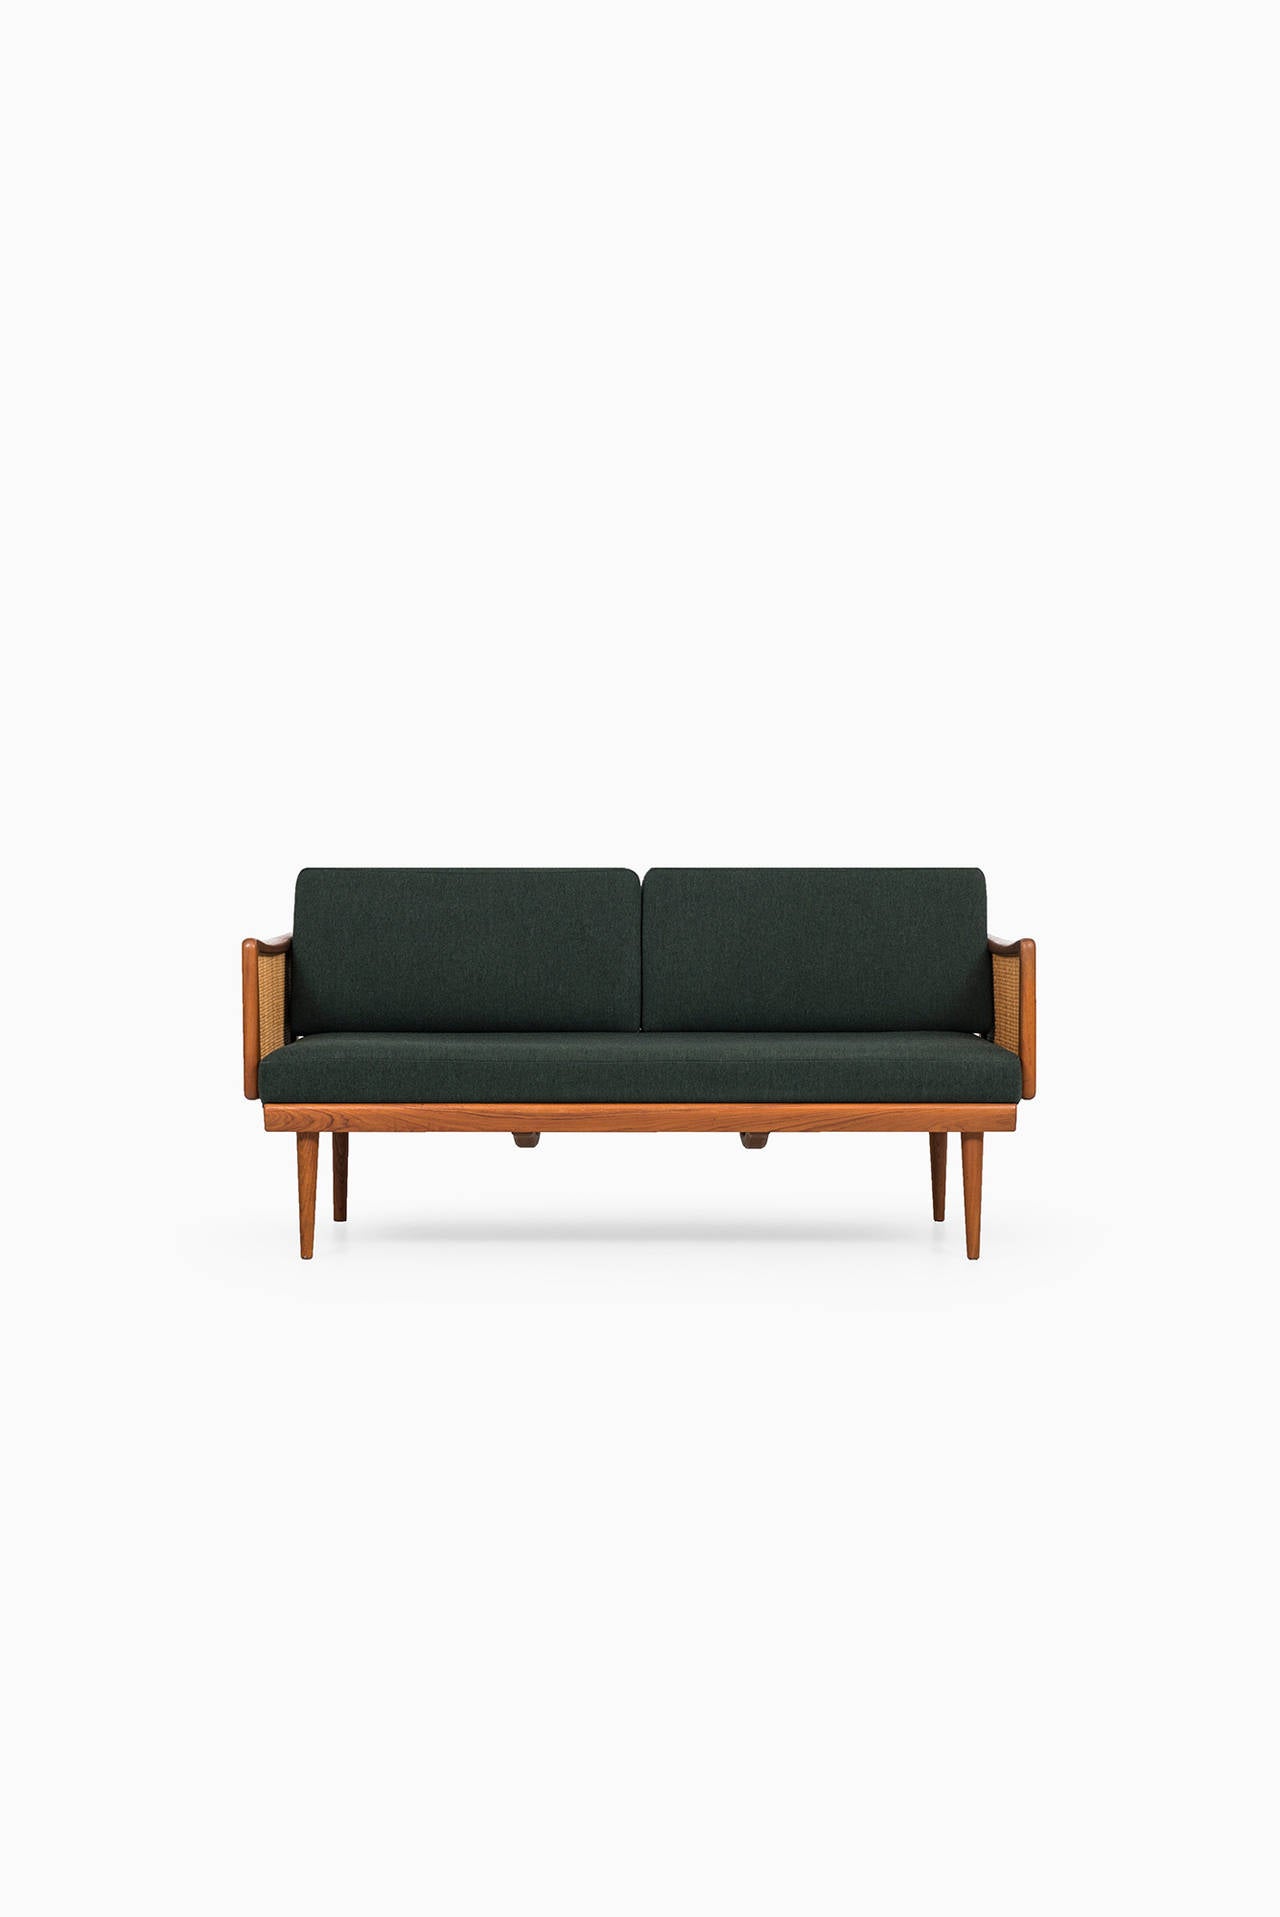 Rare sofa / daybed model FD 451 designed by Peter Hvidt & Orla Mølgaard-Nielsen. Produced by France & Daverkosen in Denmark. Teak frame, with woven cane details. Dark green original upholstery.